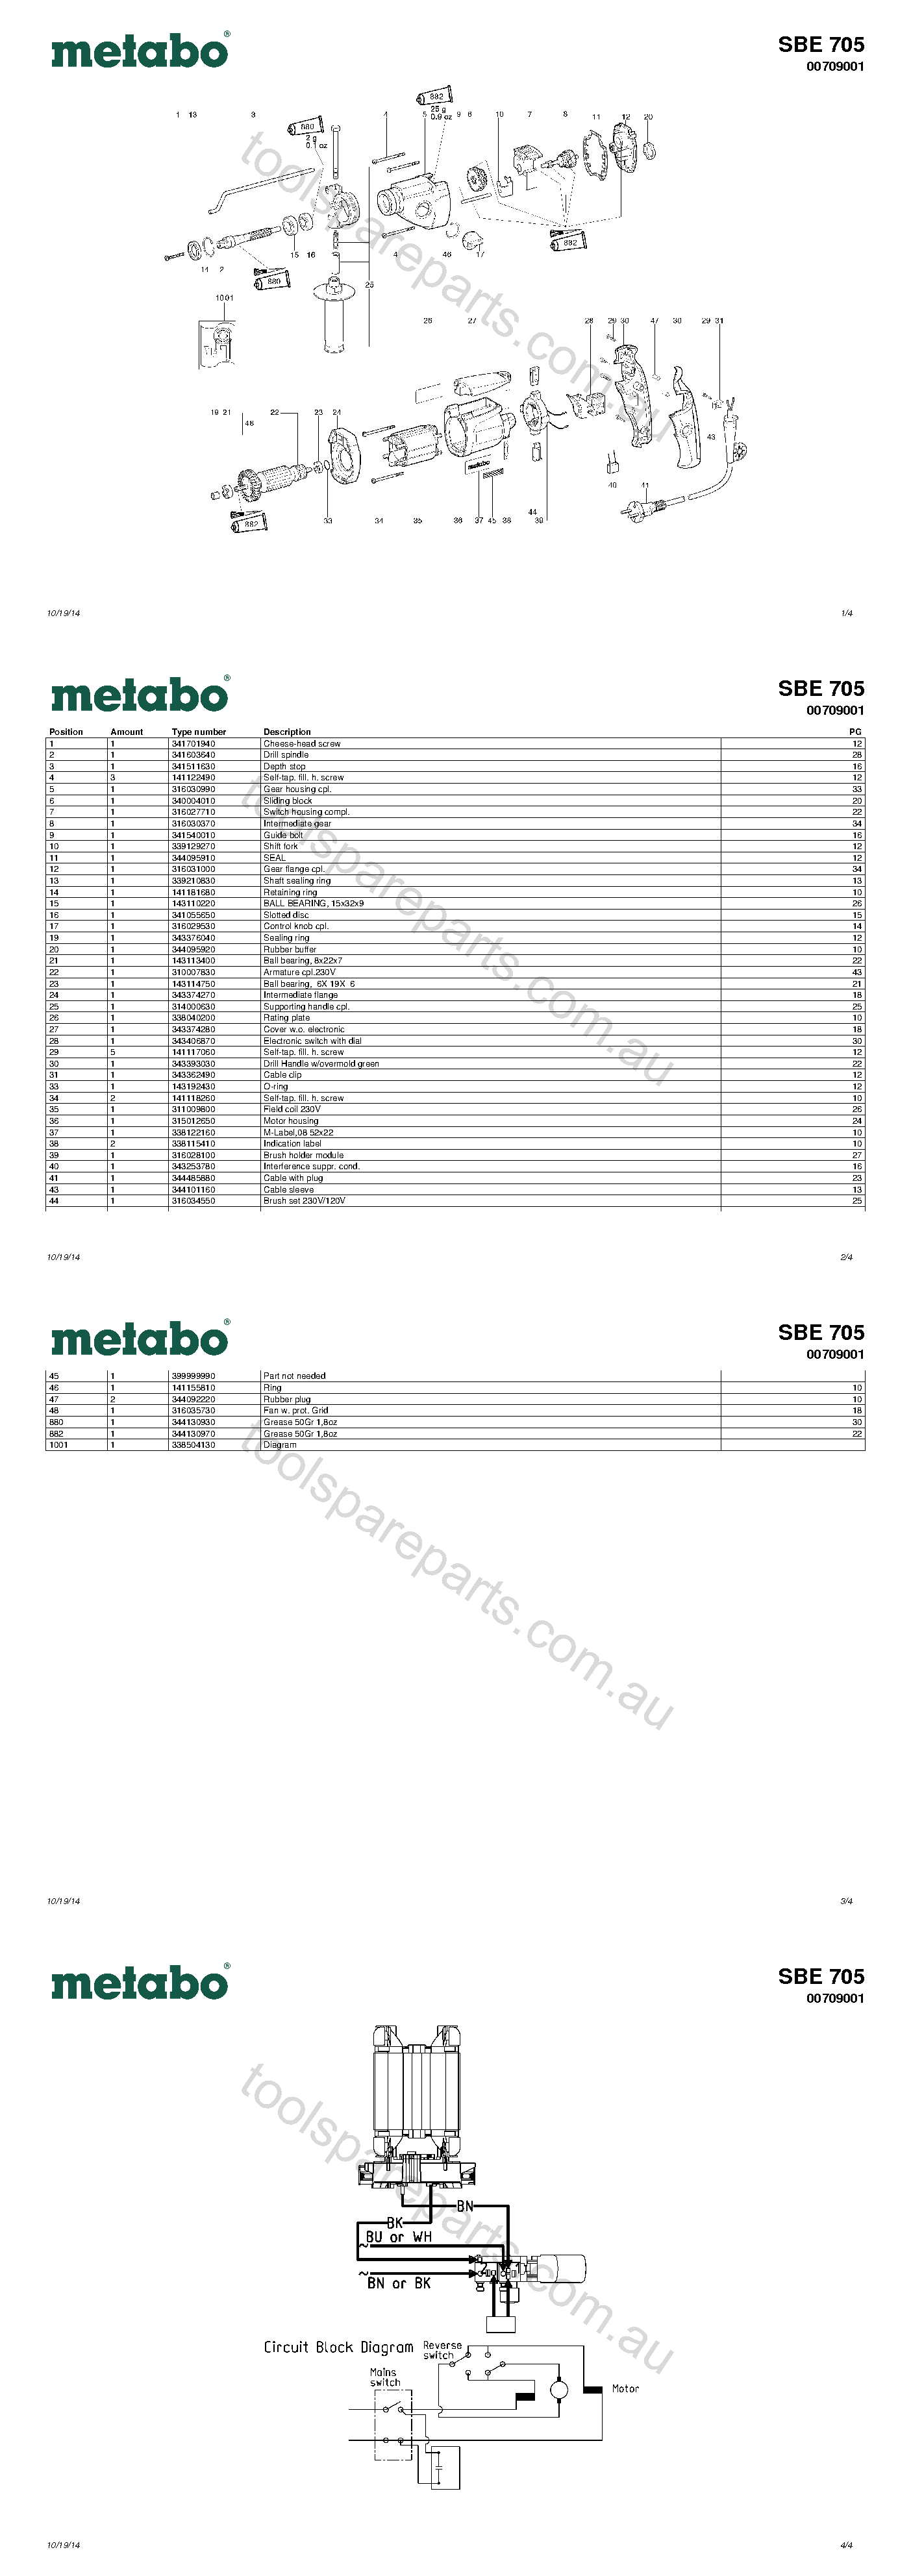 Metabo SBE 705 00709001  Diagram 1